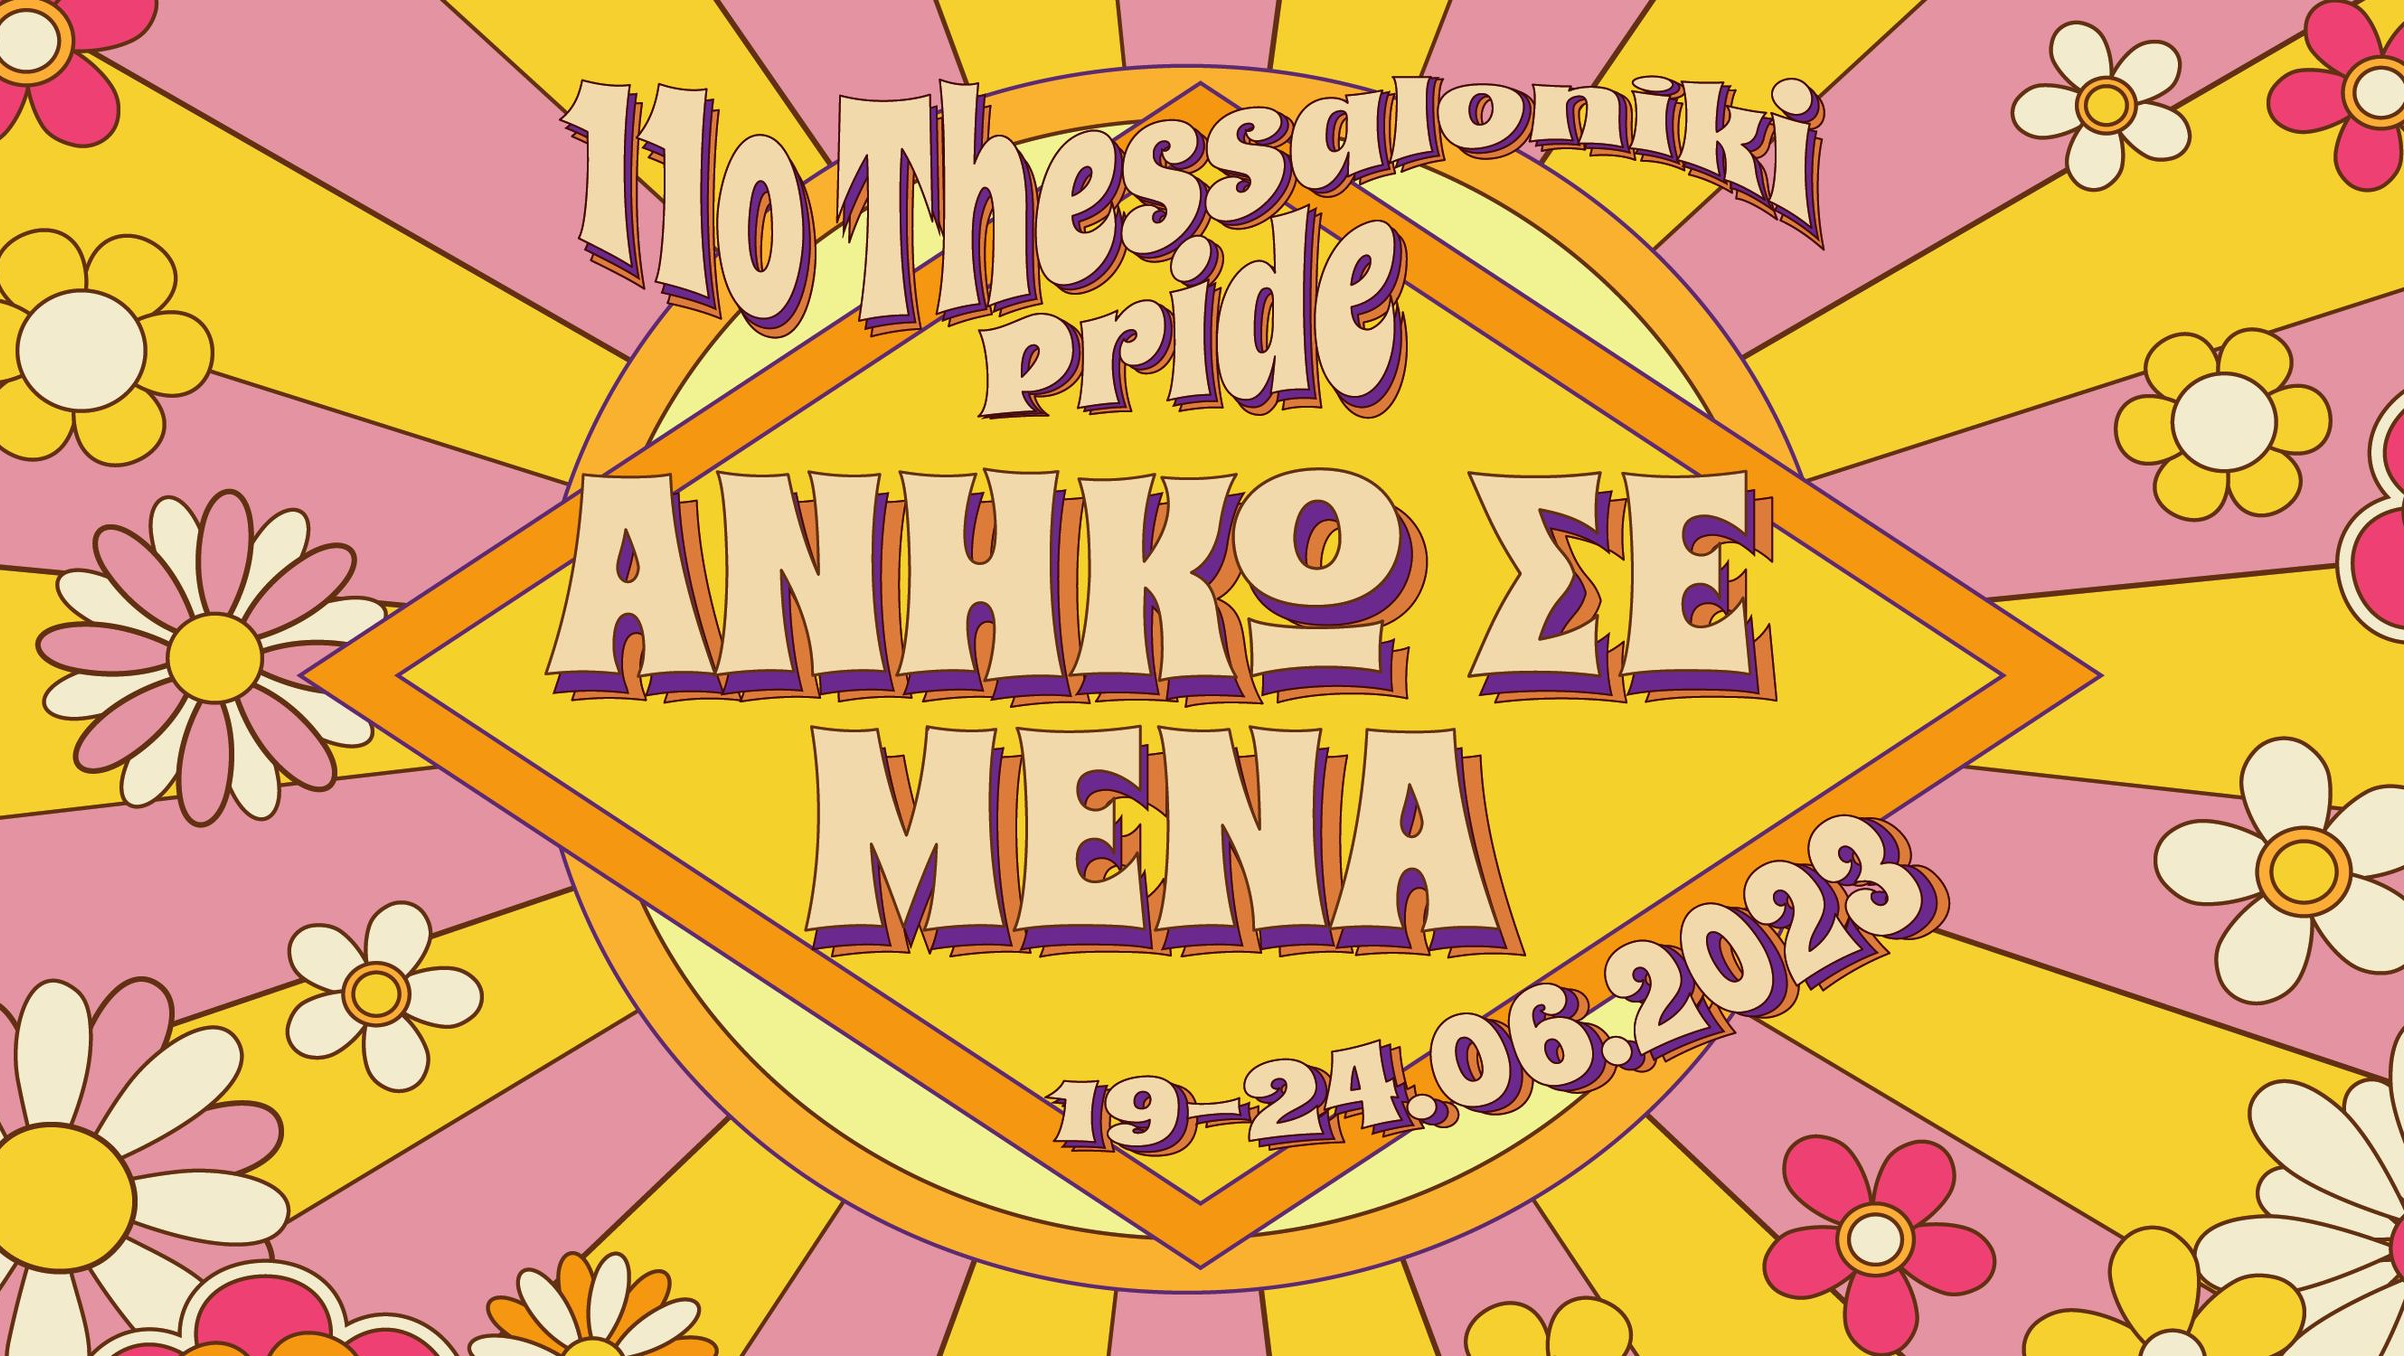 11o Thessaloniki Pride